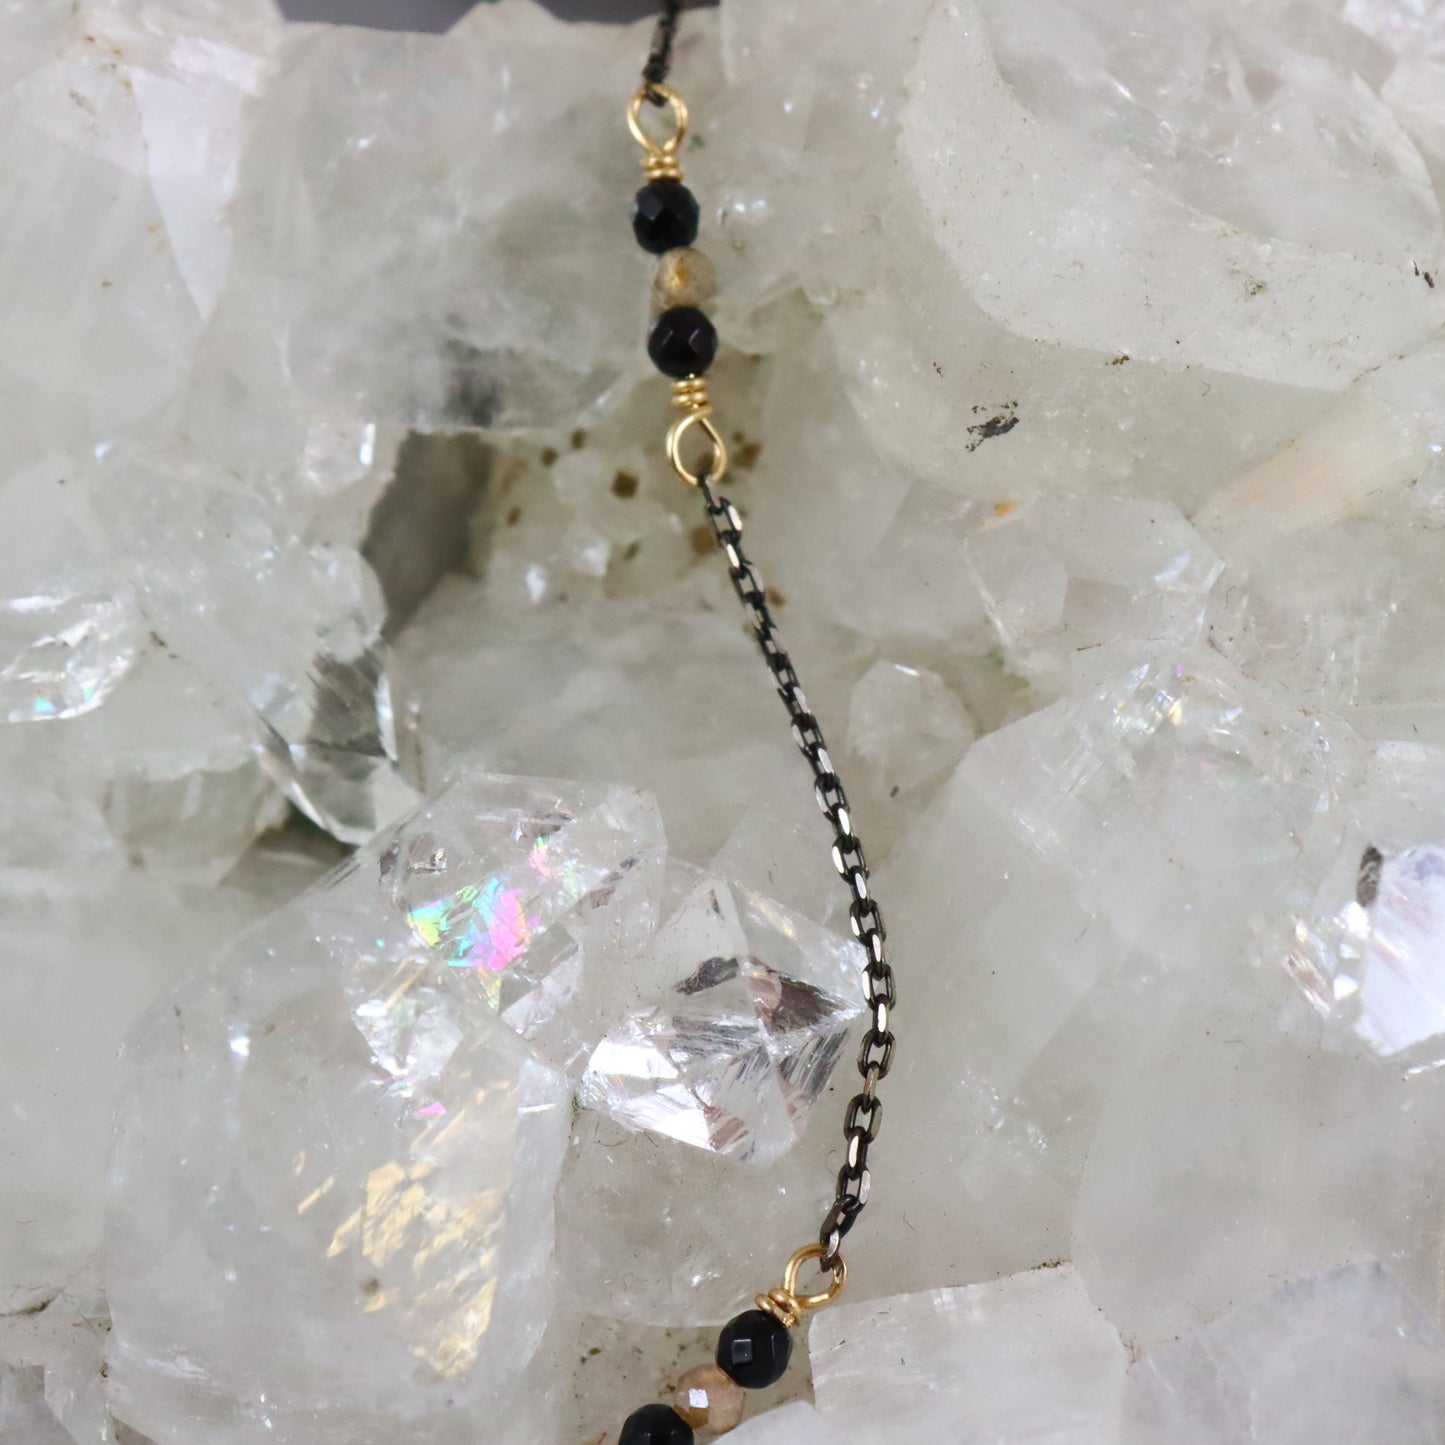 Black Spinel & Labradorite Necklace